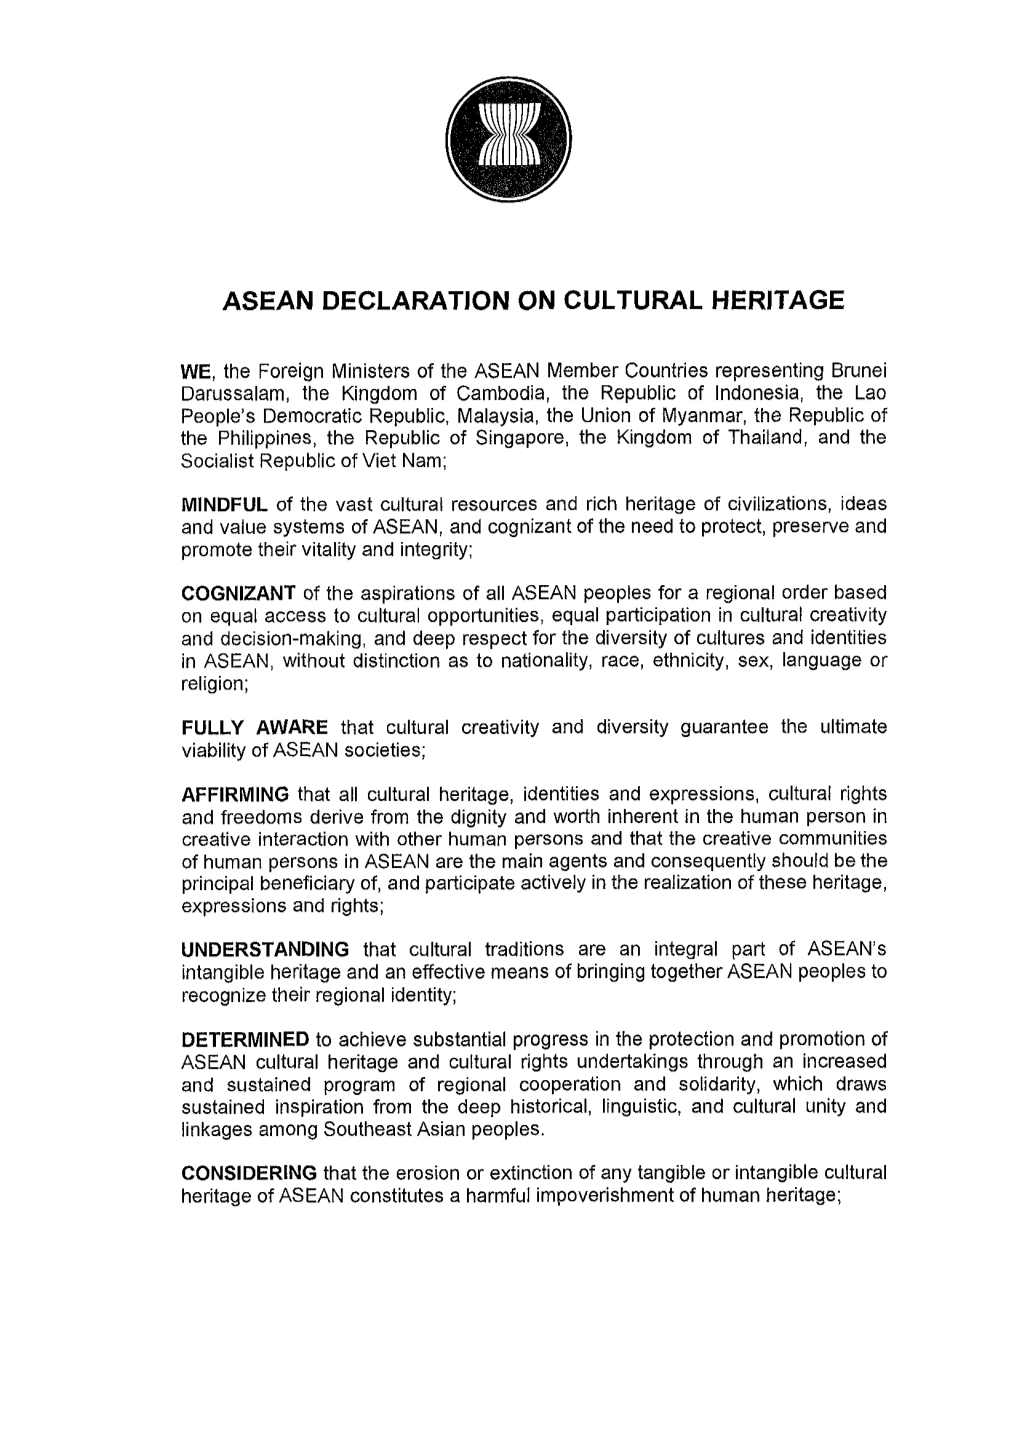 Asean Declaration on Cultural Heritage